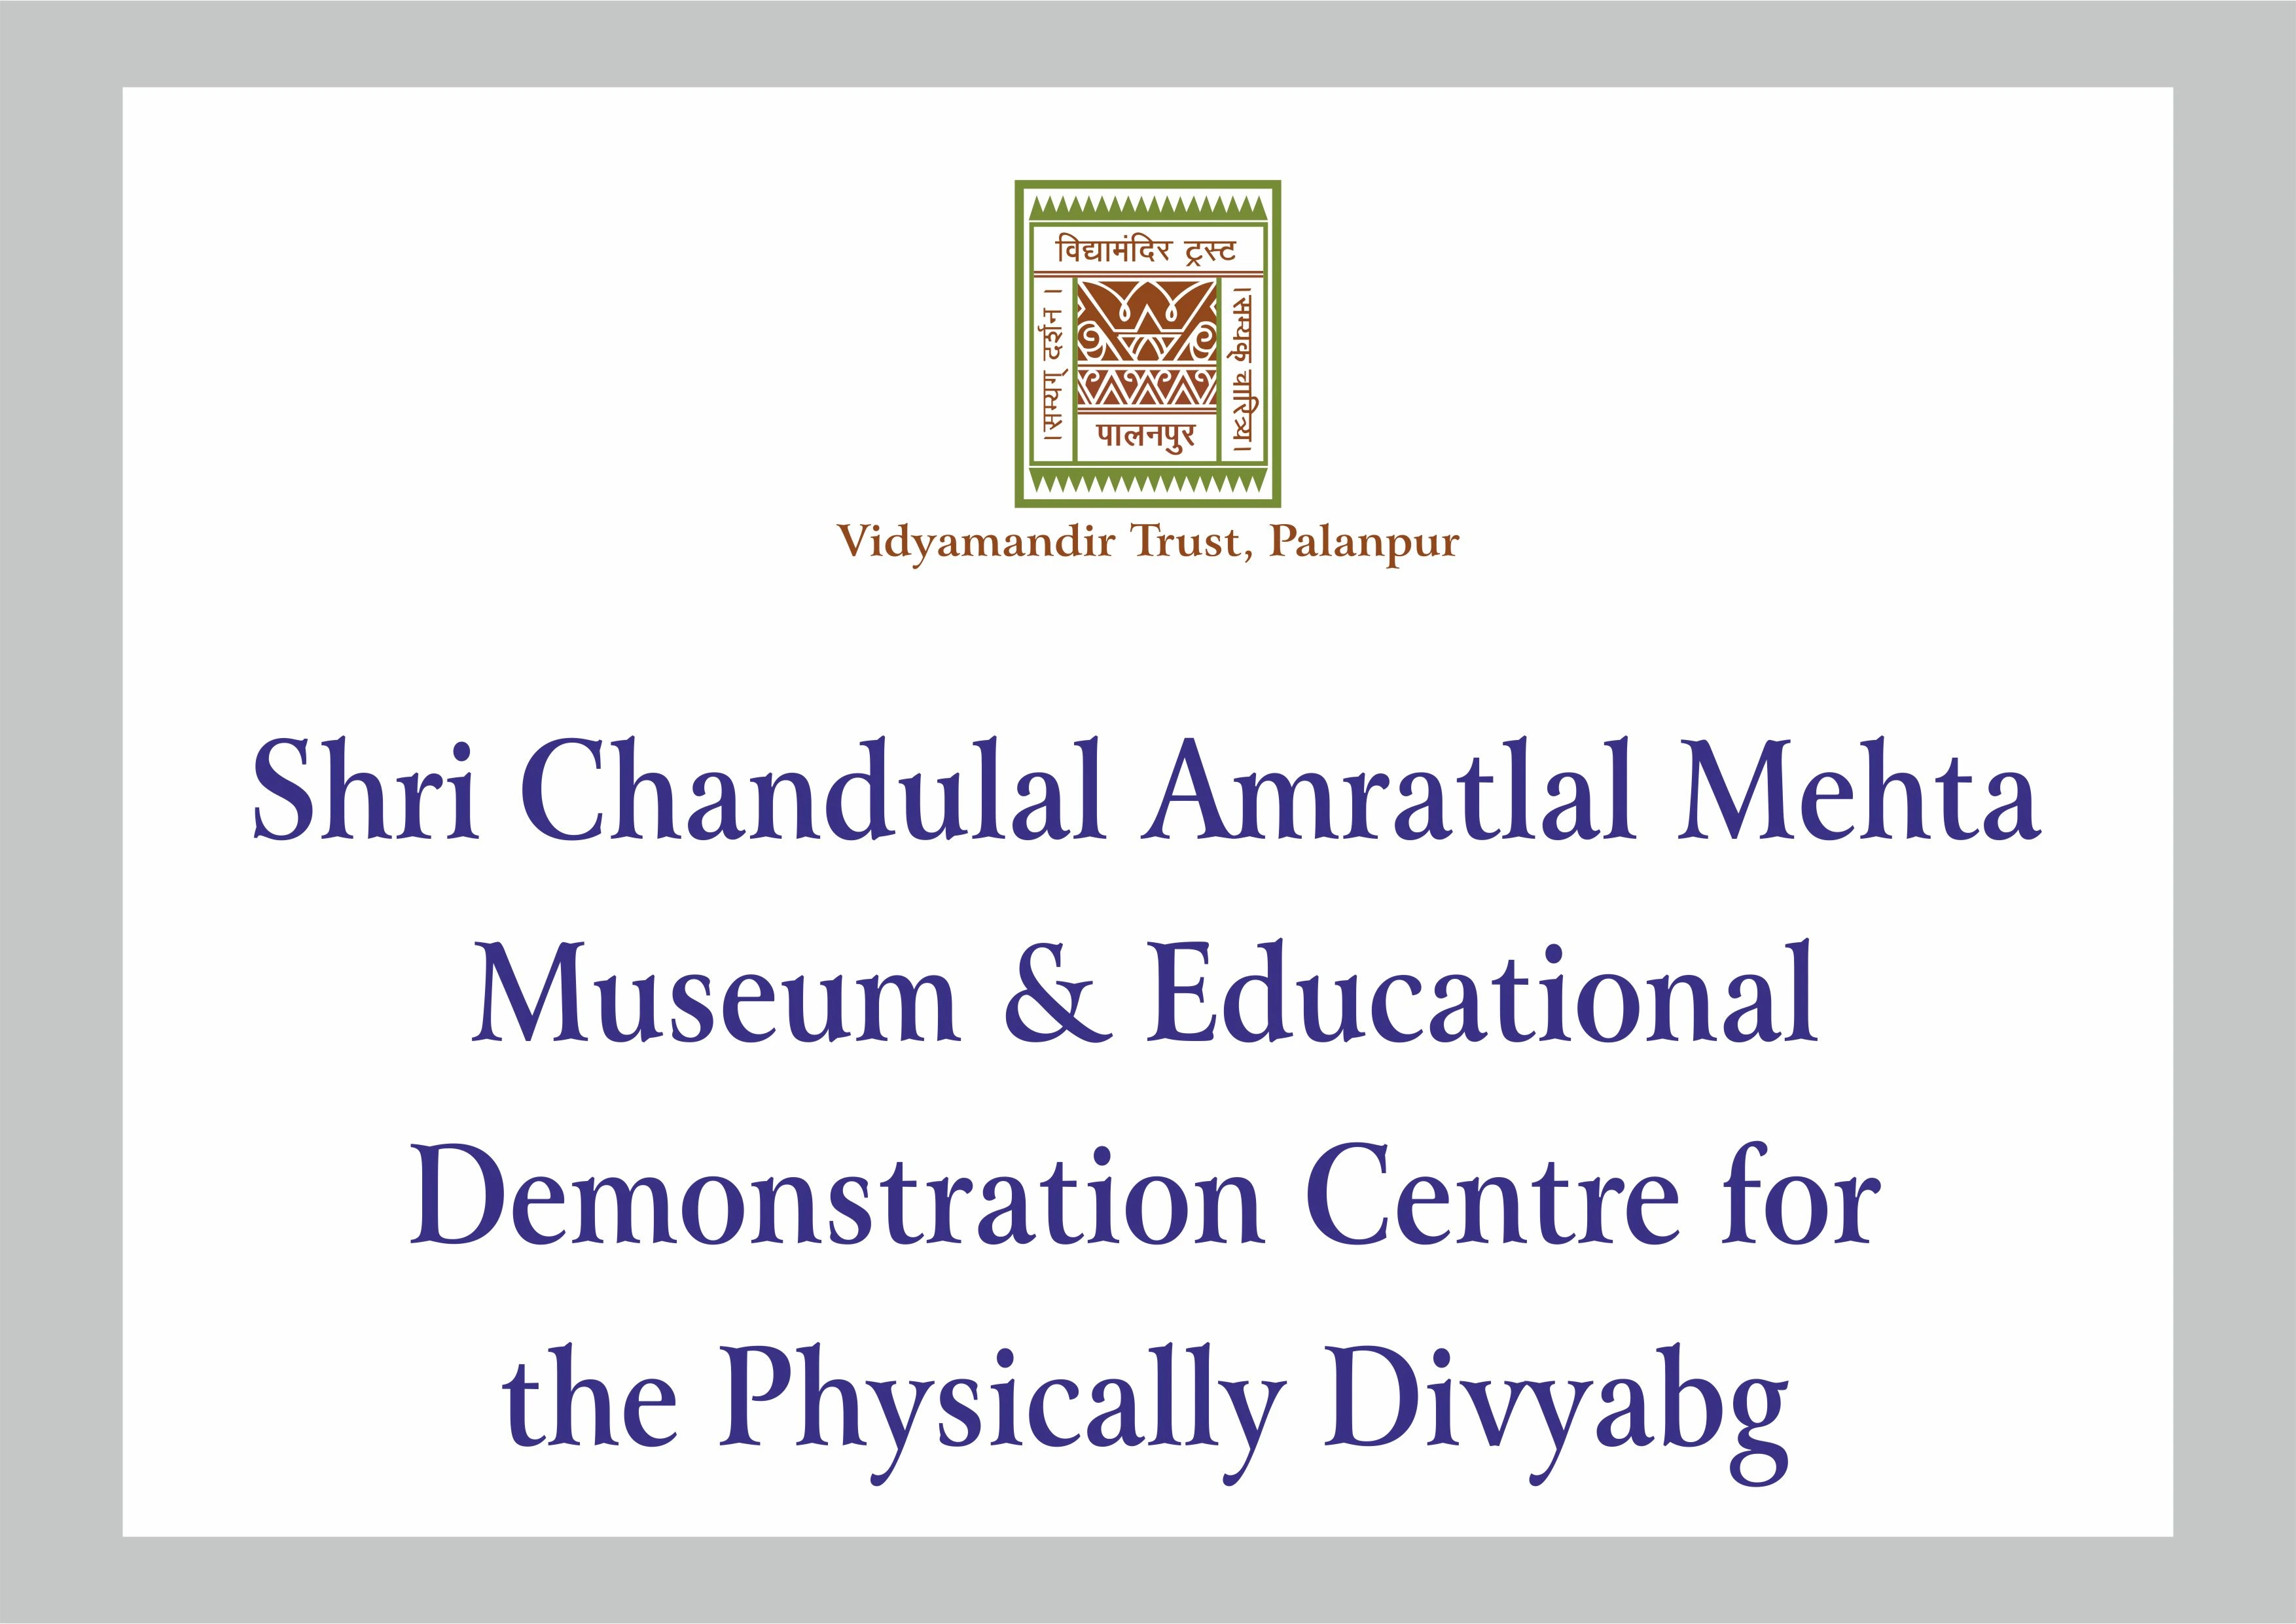 Shri Chandulal Amratlal Mehta Museum & Educational Demonstration Centre for the Physically Divyang - Building Photo